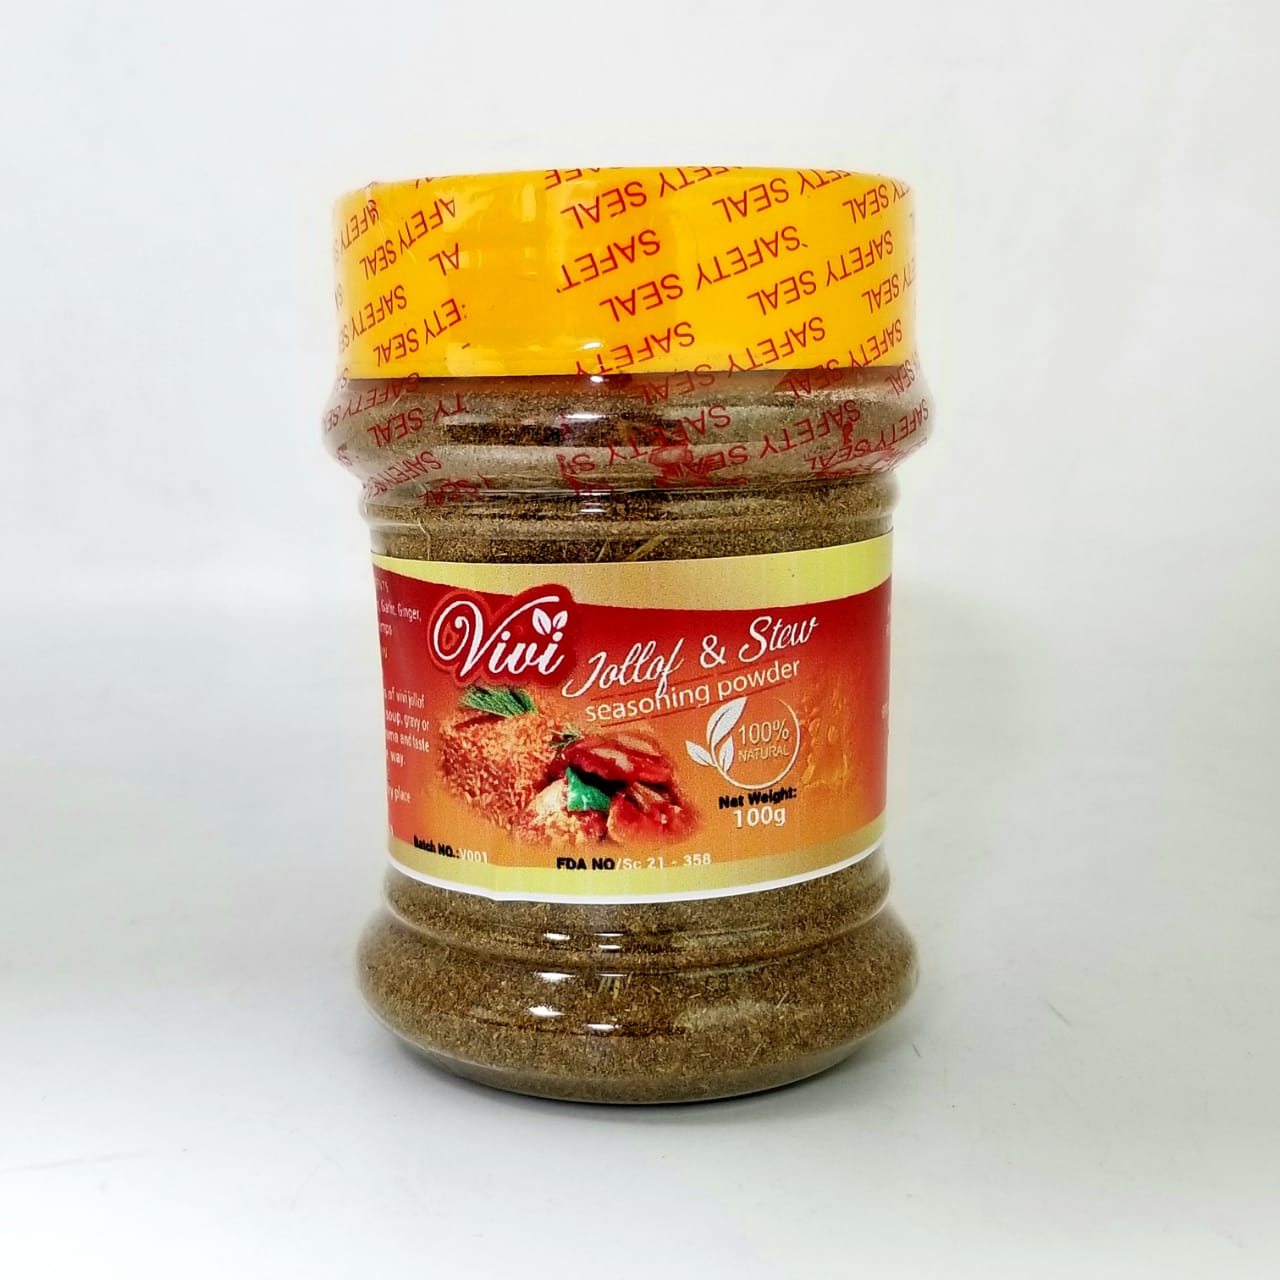 Jollof & Stew Seasoning Powder, Vivi, 100g